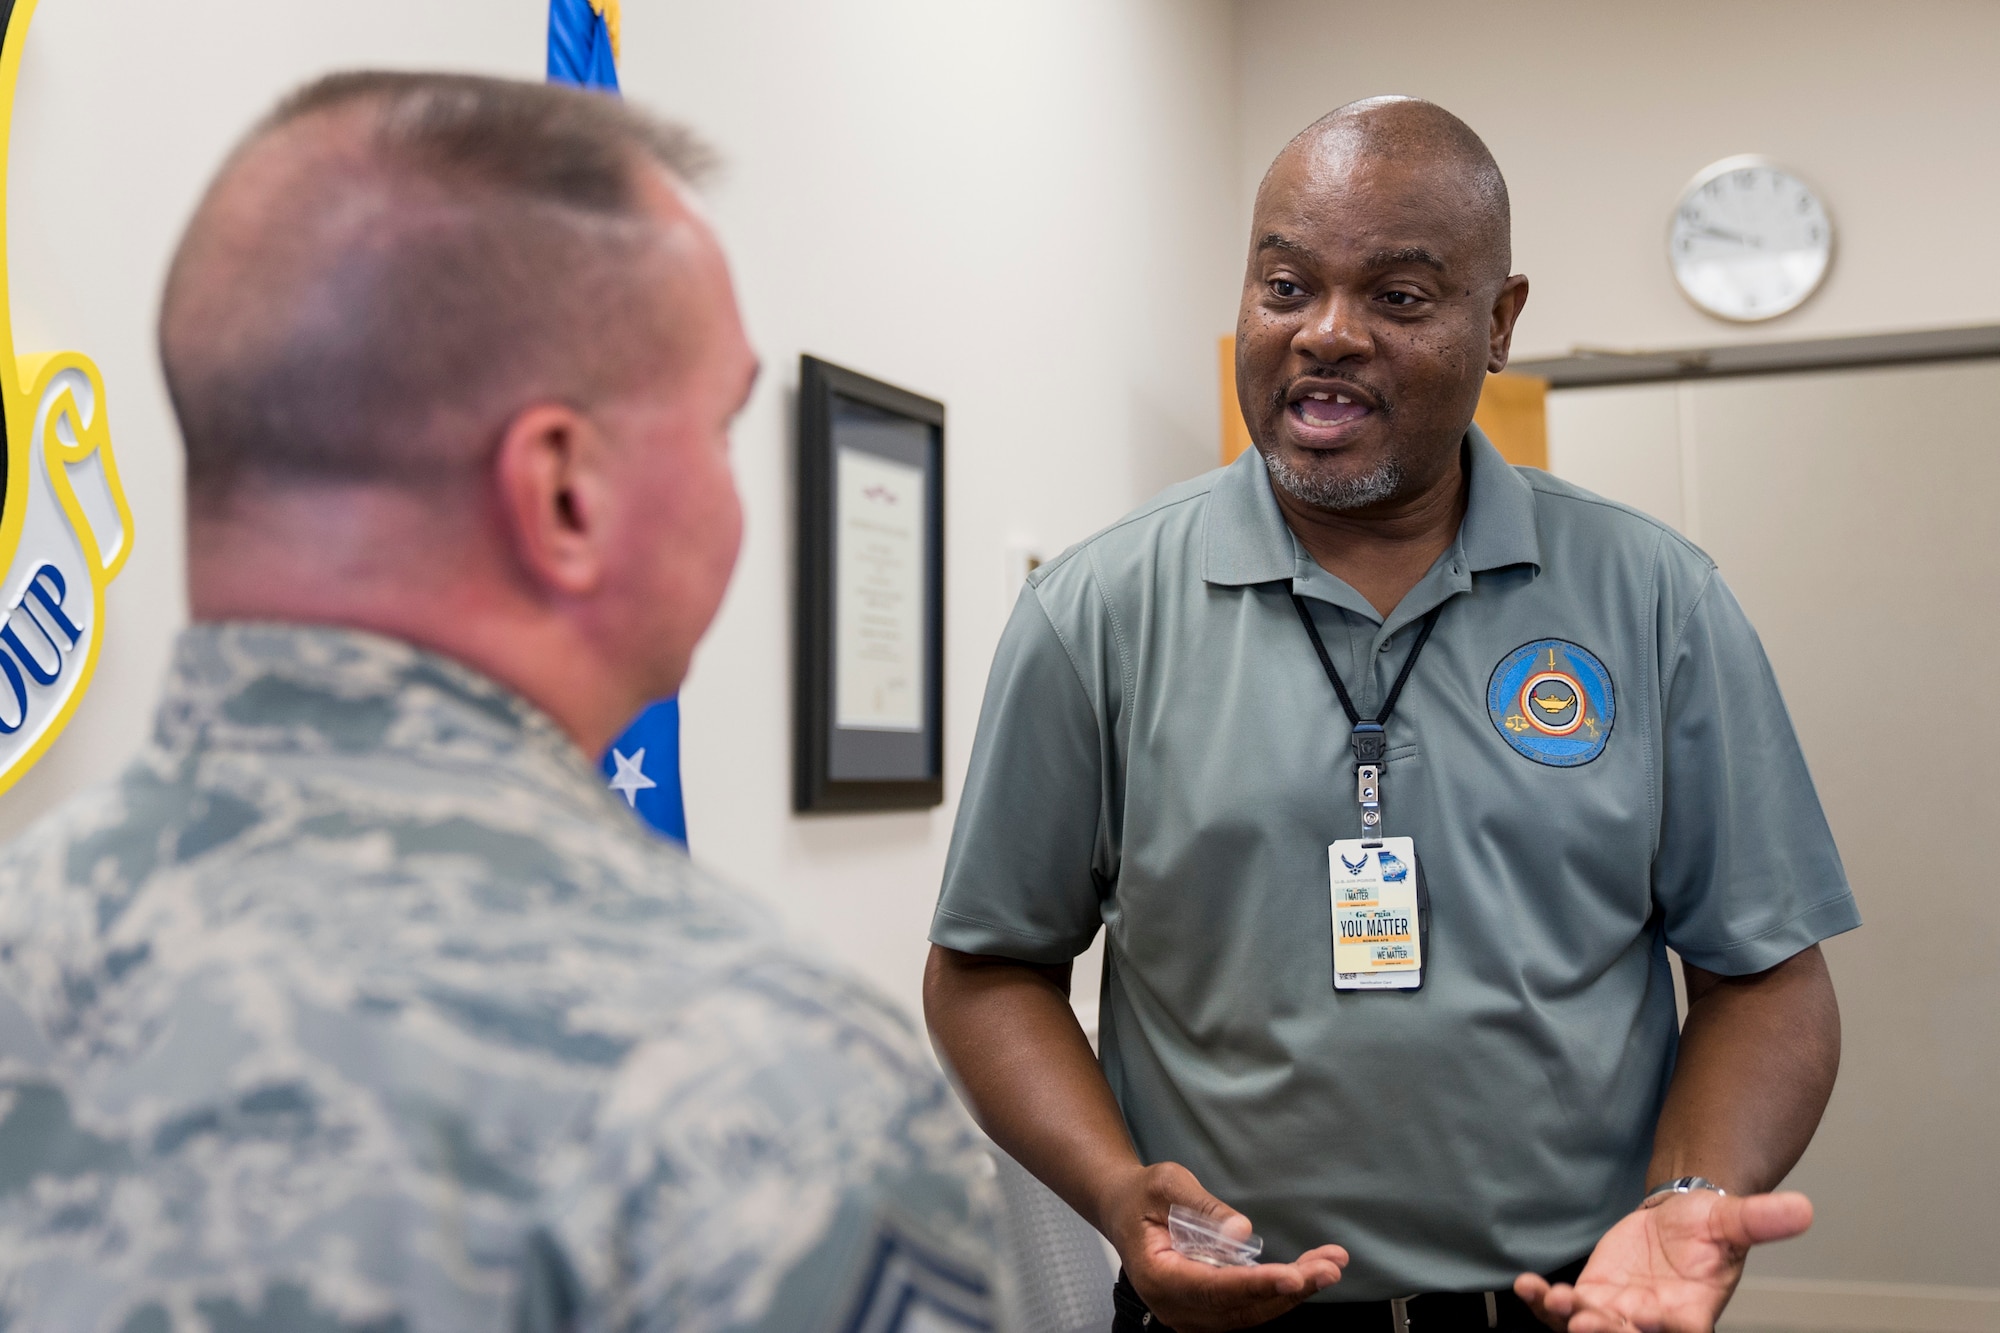 Senior Master Sgt. Richard Neal helps shape and mentor Reserve Citizen Airmen